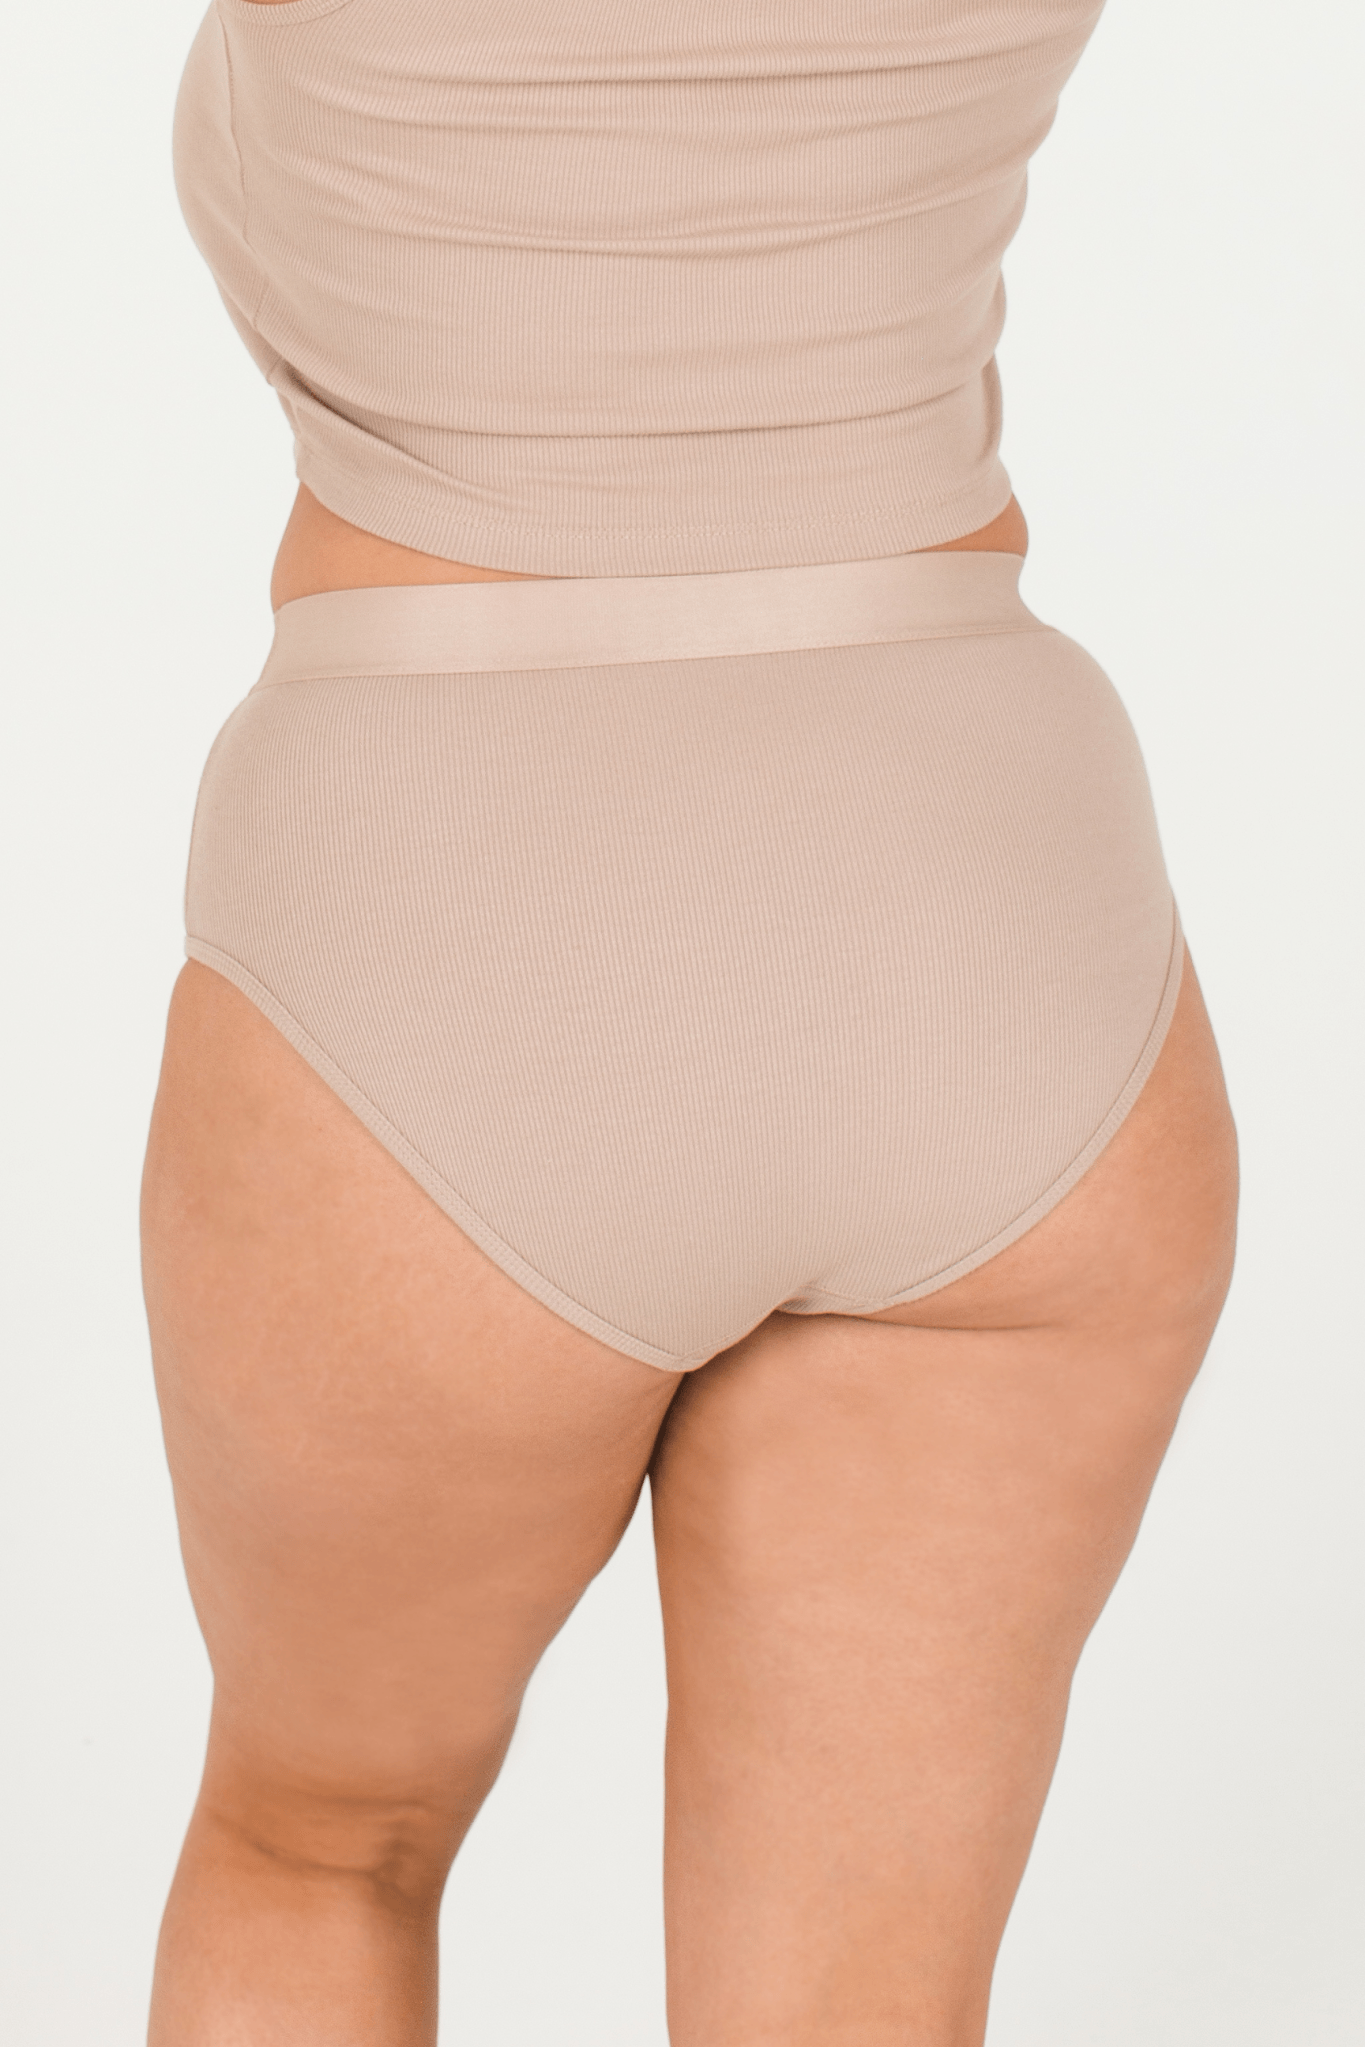 Corsinel Medium Support Underwear Female, High Waisted –